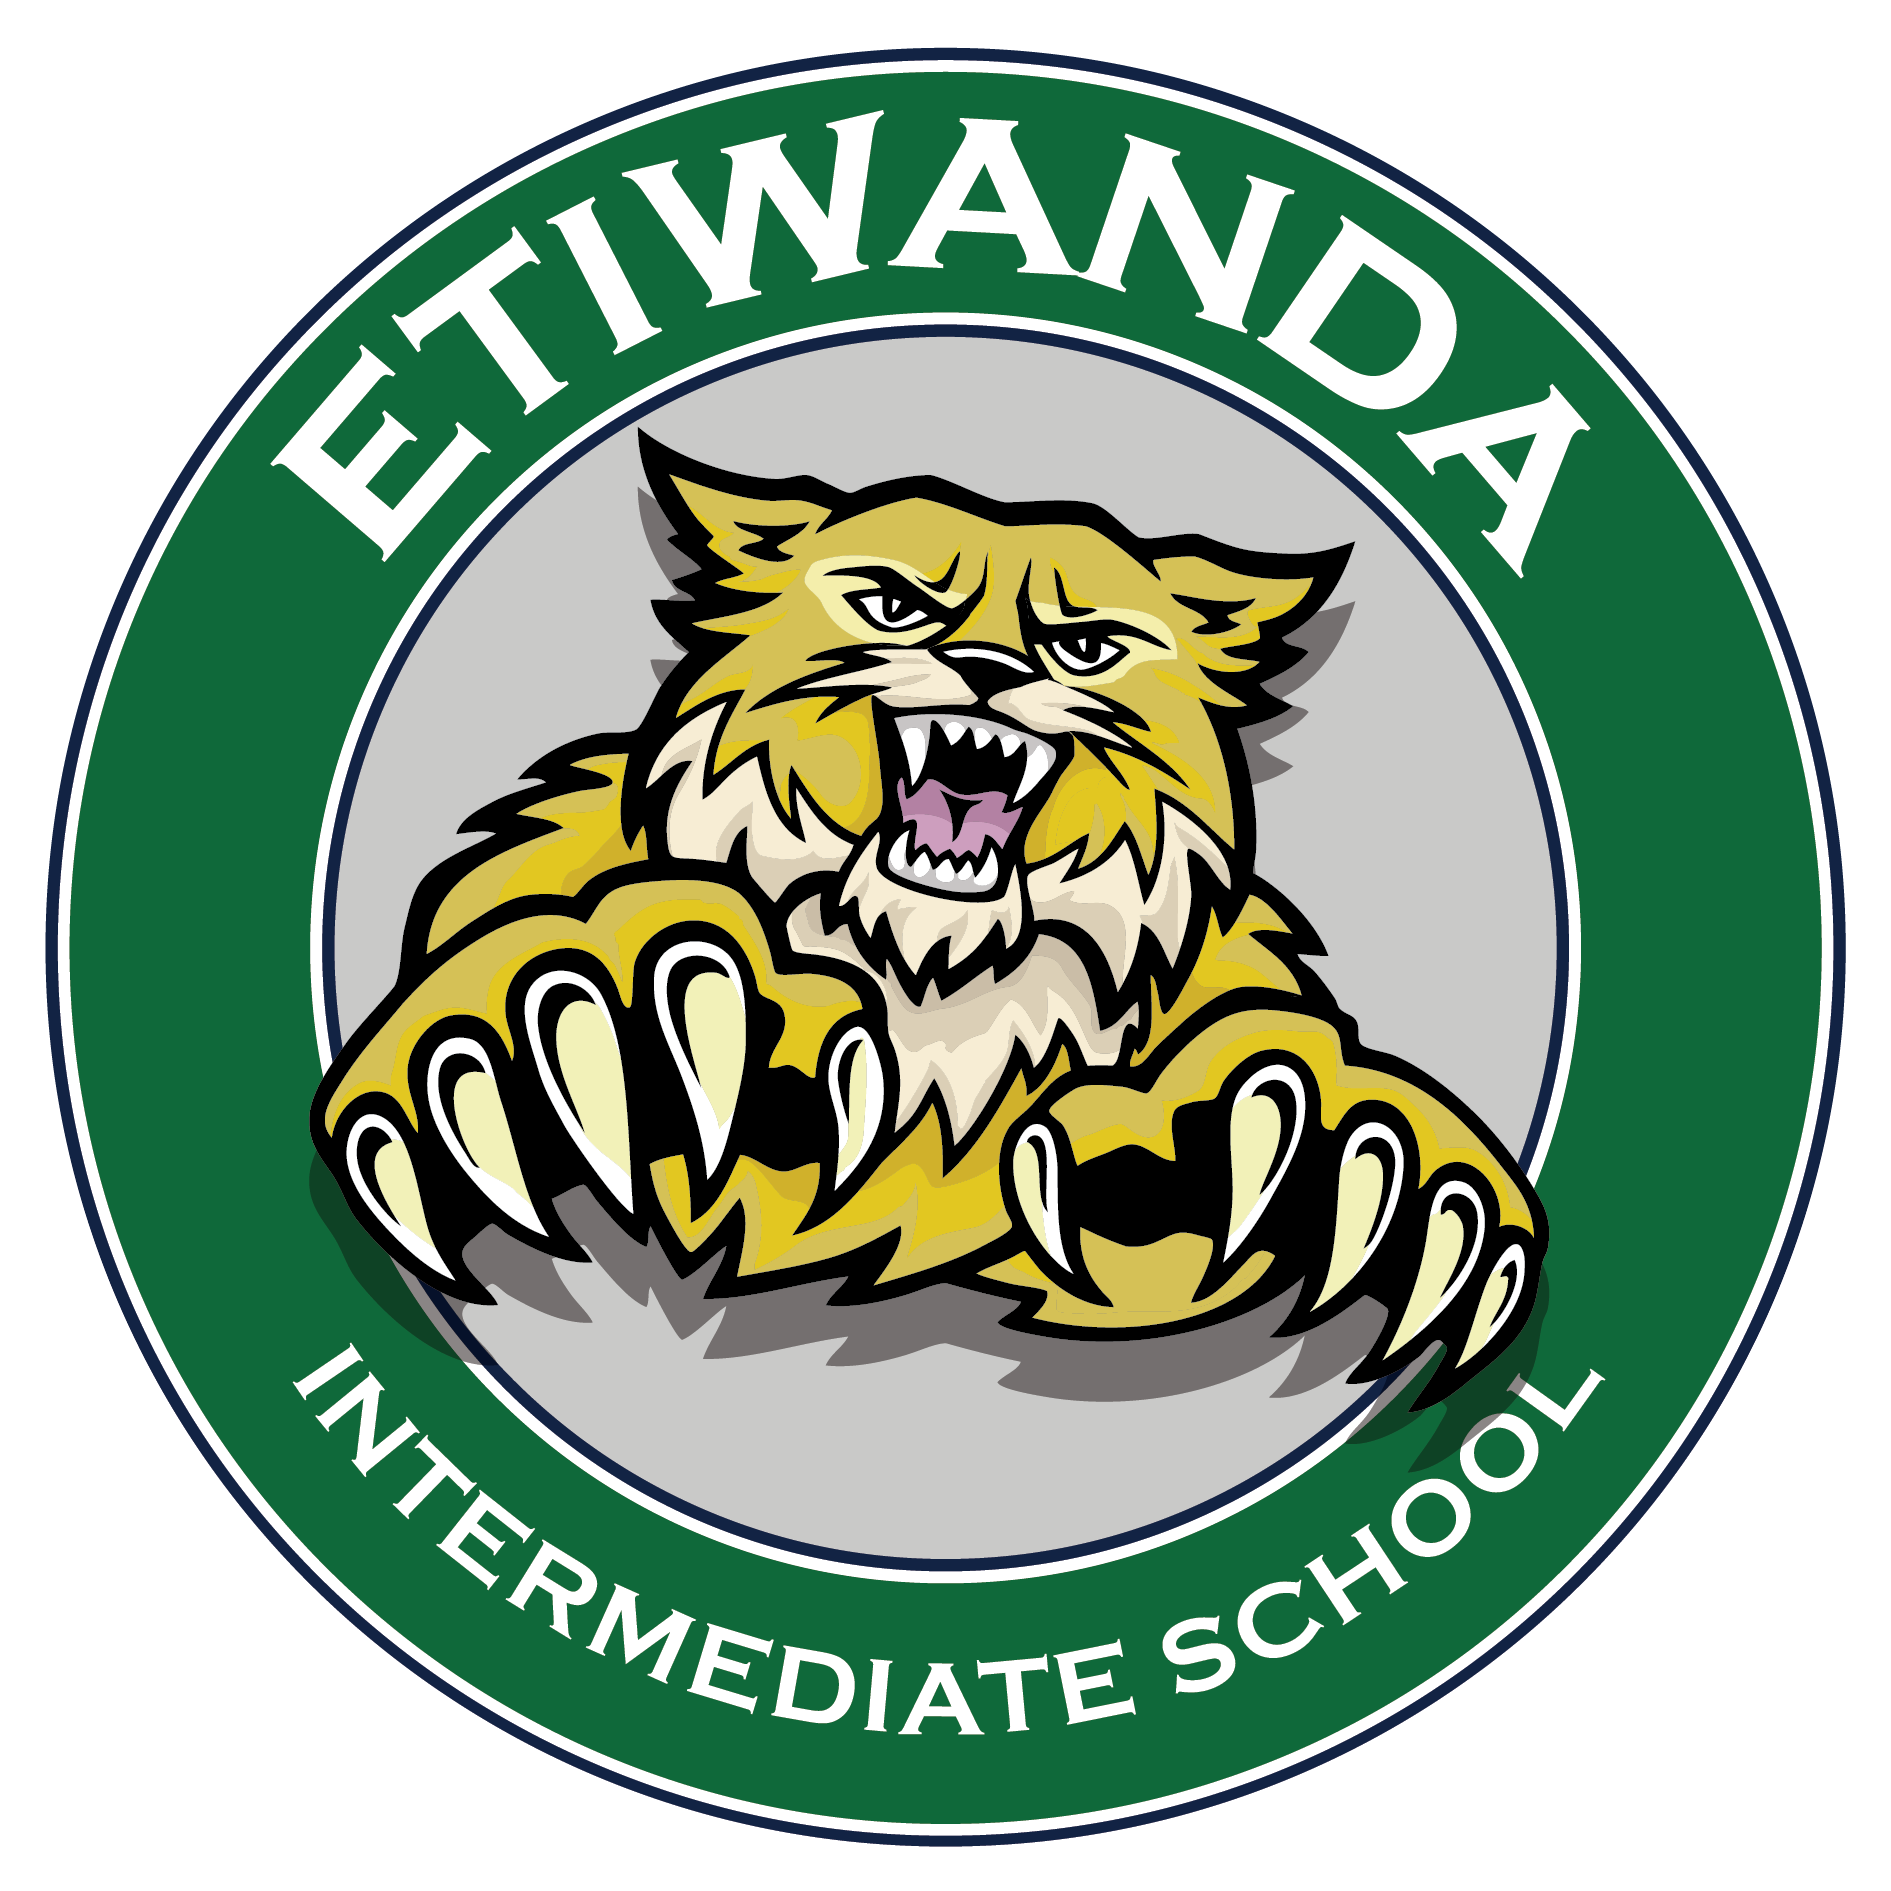 Image if EIS wildcat with text: Etiwanda Intermediate School